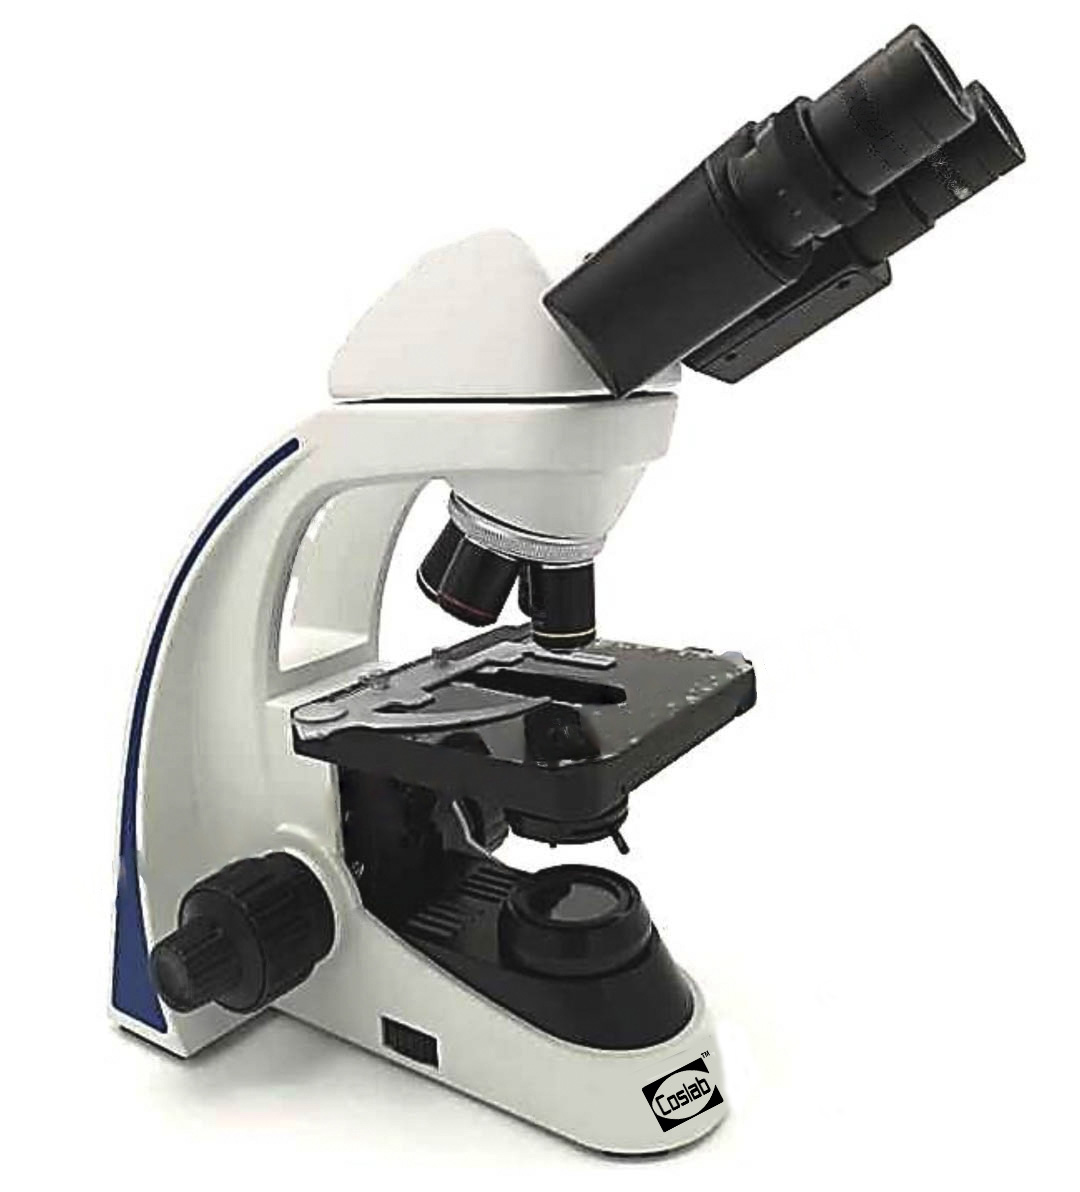 HL-19 Coaxial Research Microscopes (BINO.)